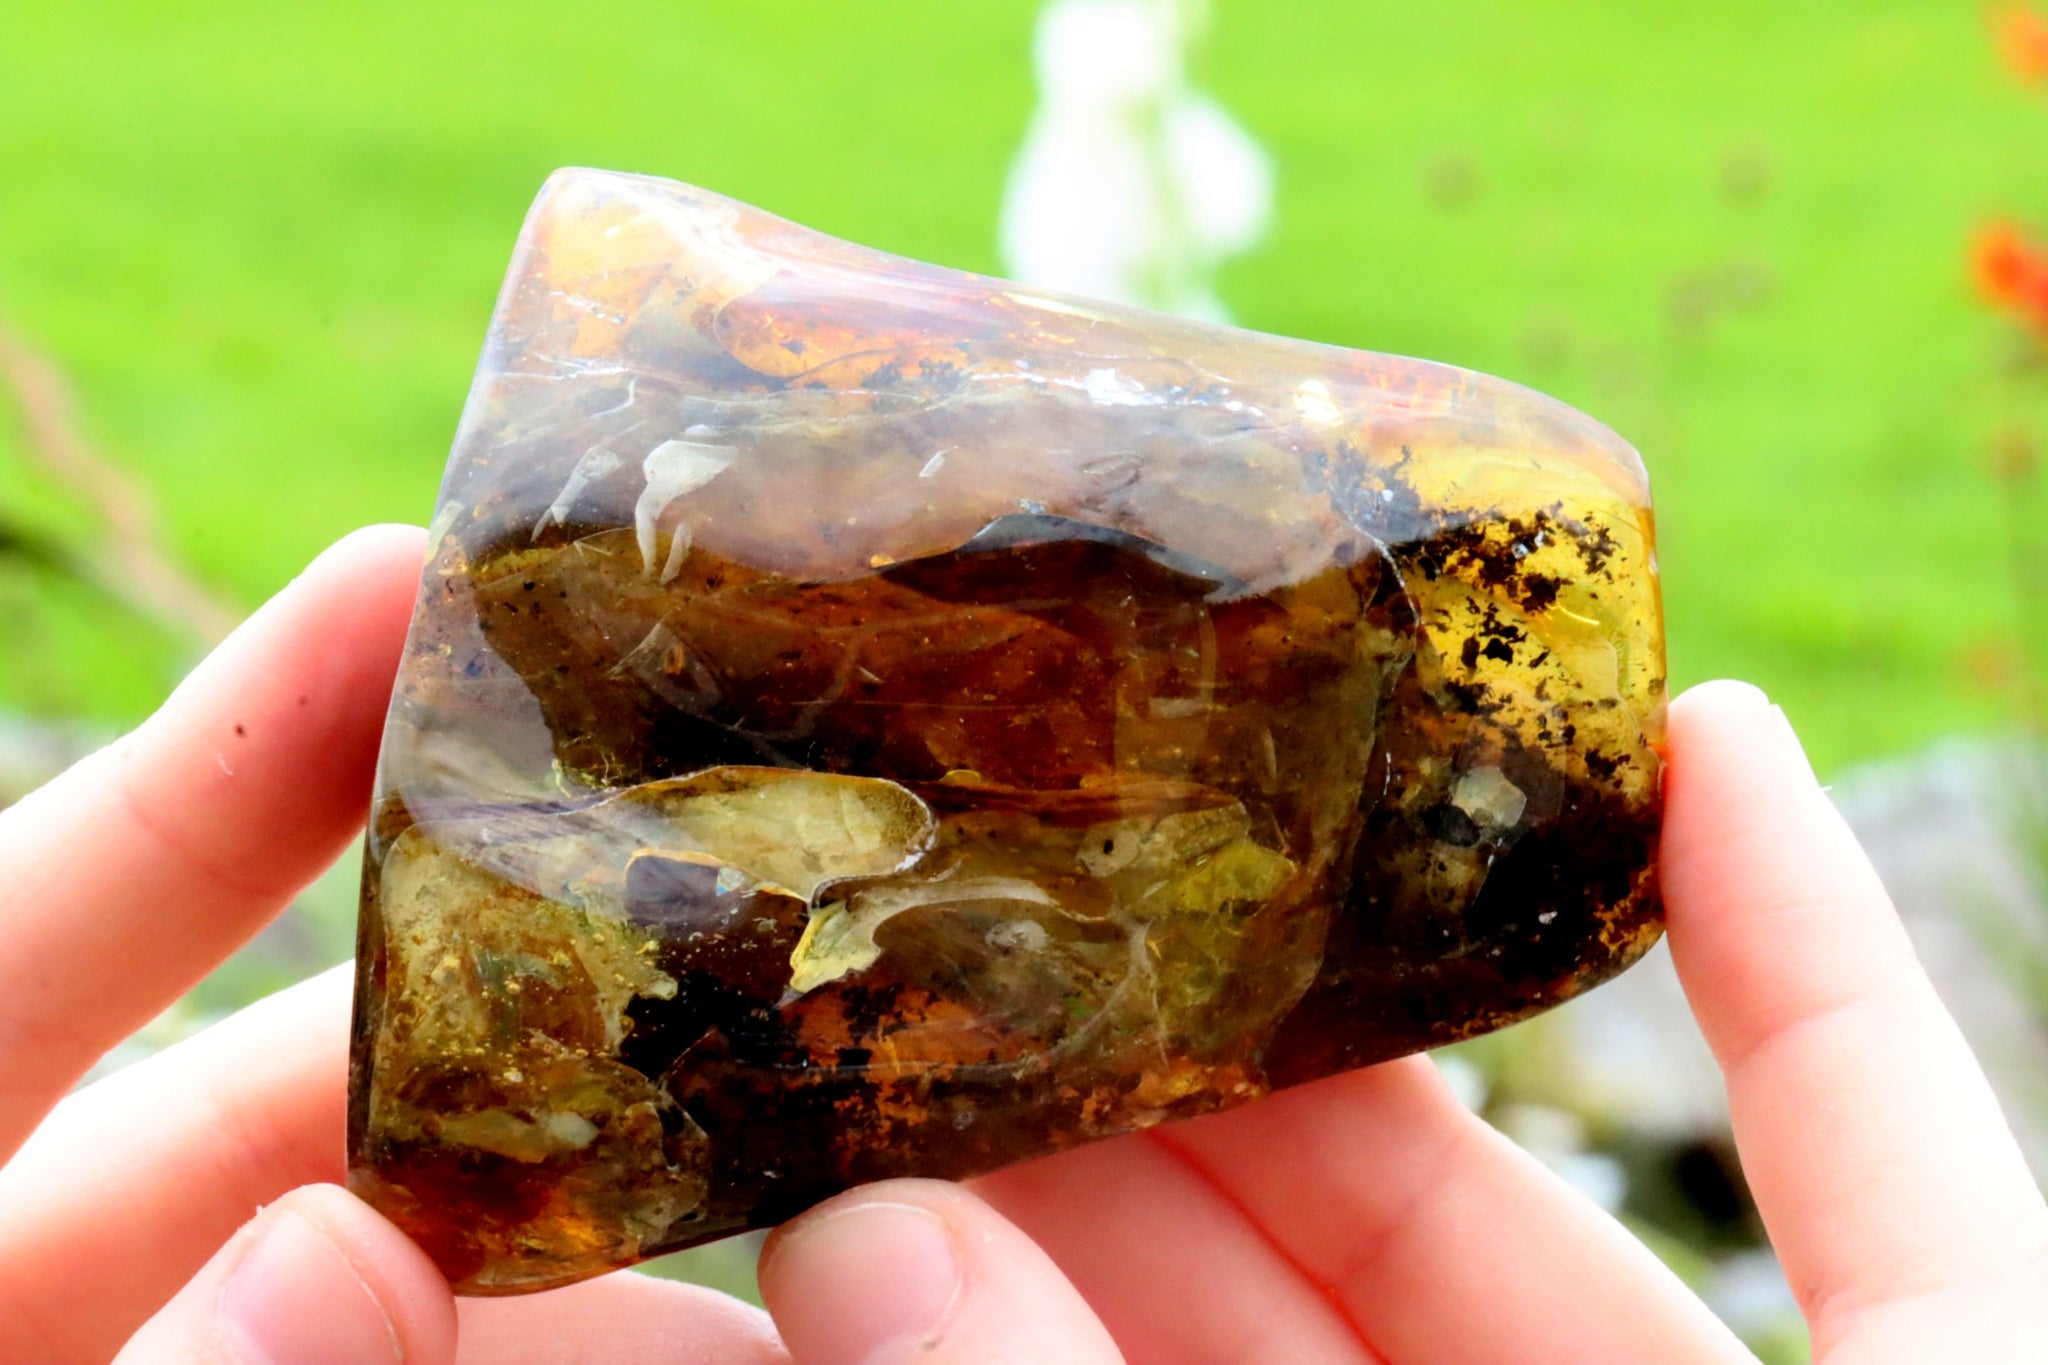 Unbelievable Natural Amber Gemstone 78g